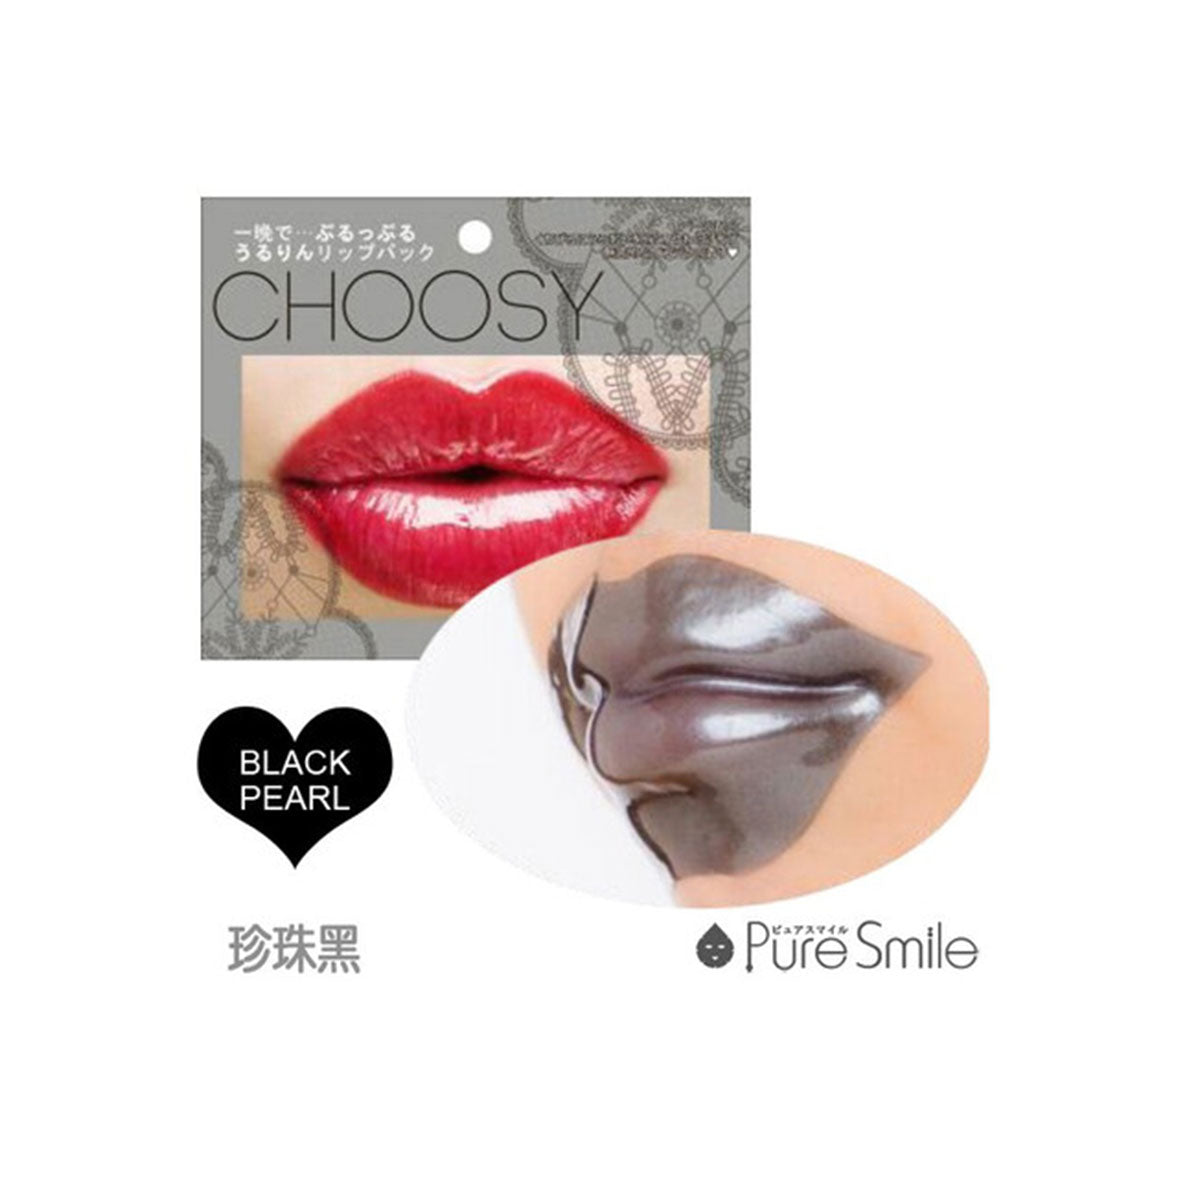 PURE SMILE Choosy Lip Care Sheet Lip Mask #Black Pearl 1 Sheet